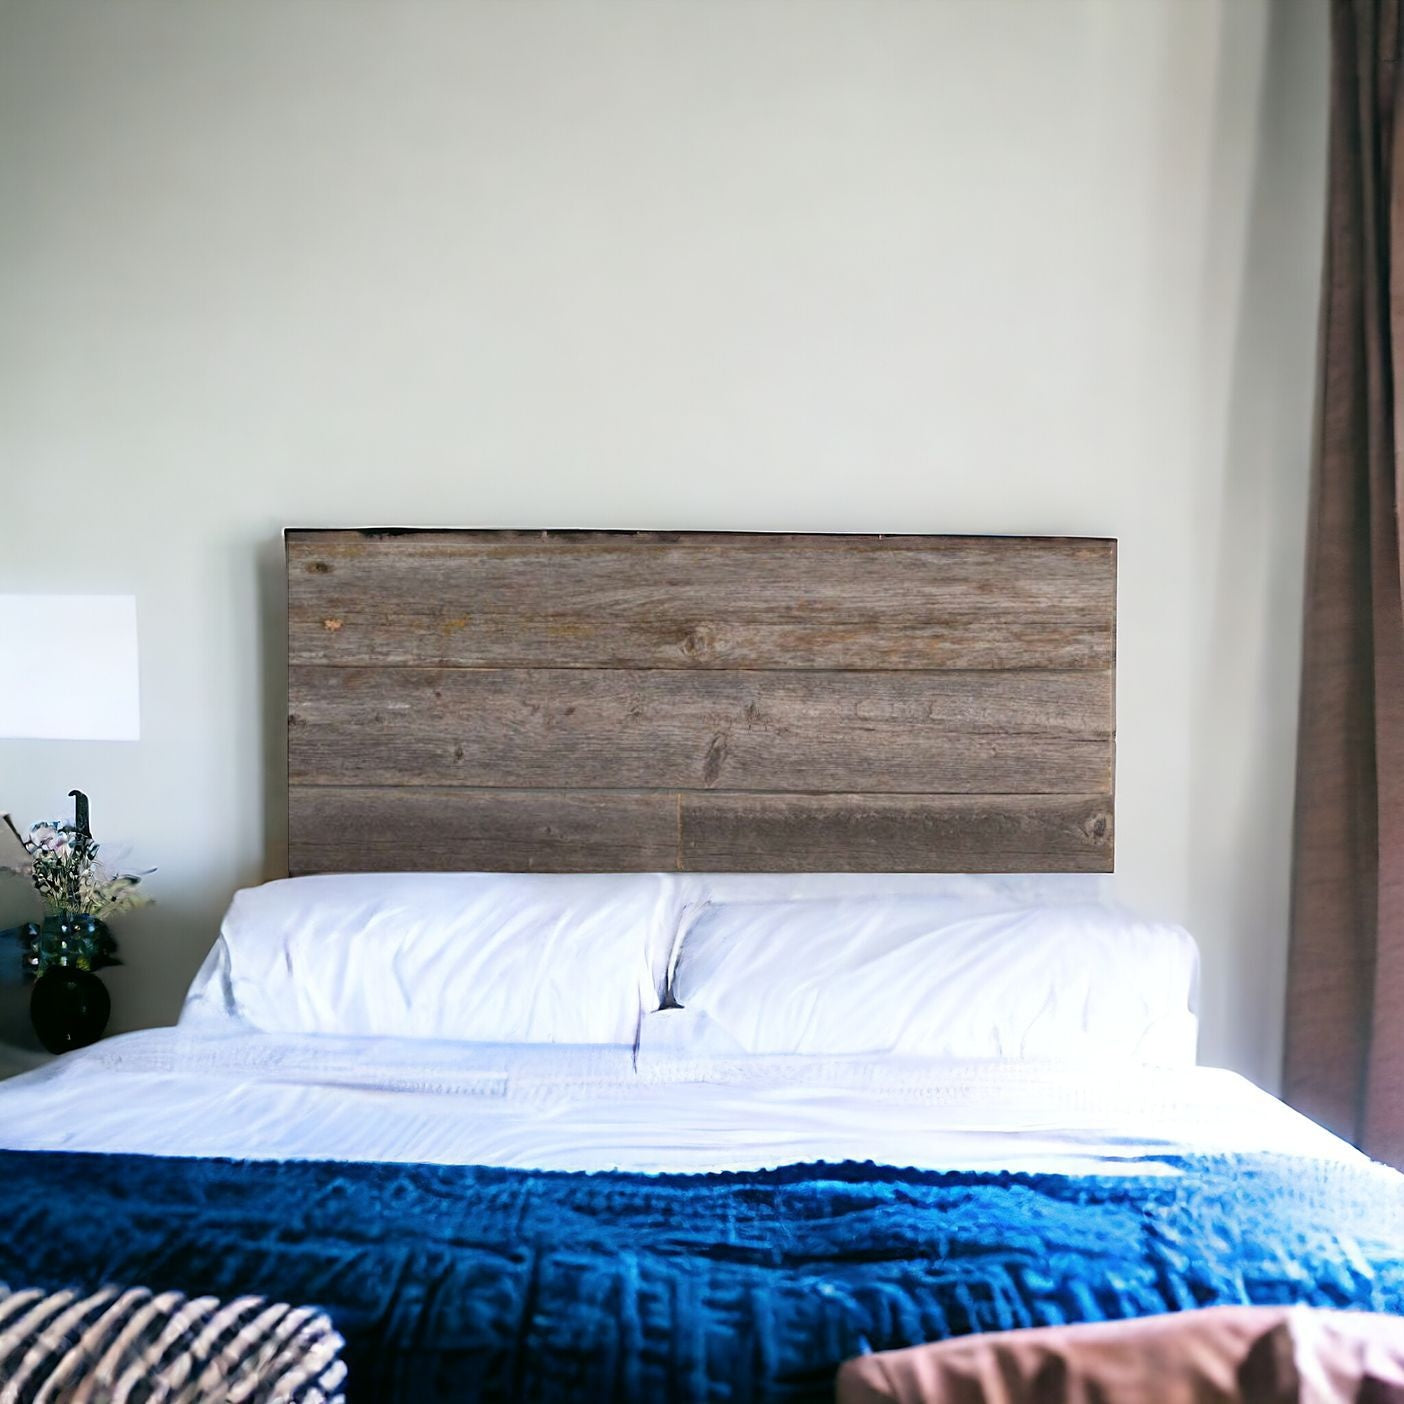 Set of Six 4" X 12" Gray and Brown Wood Planks Wall Decor